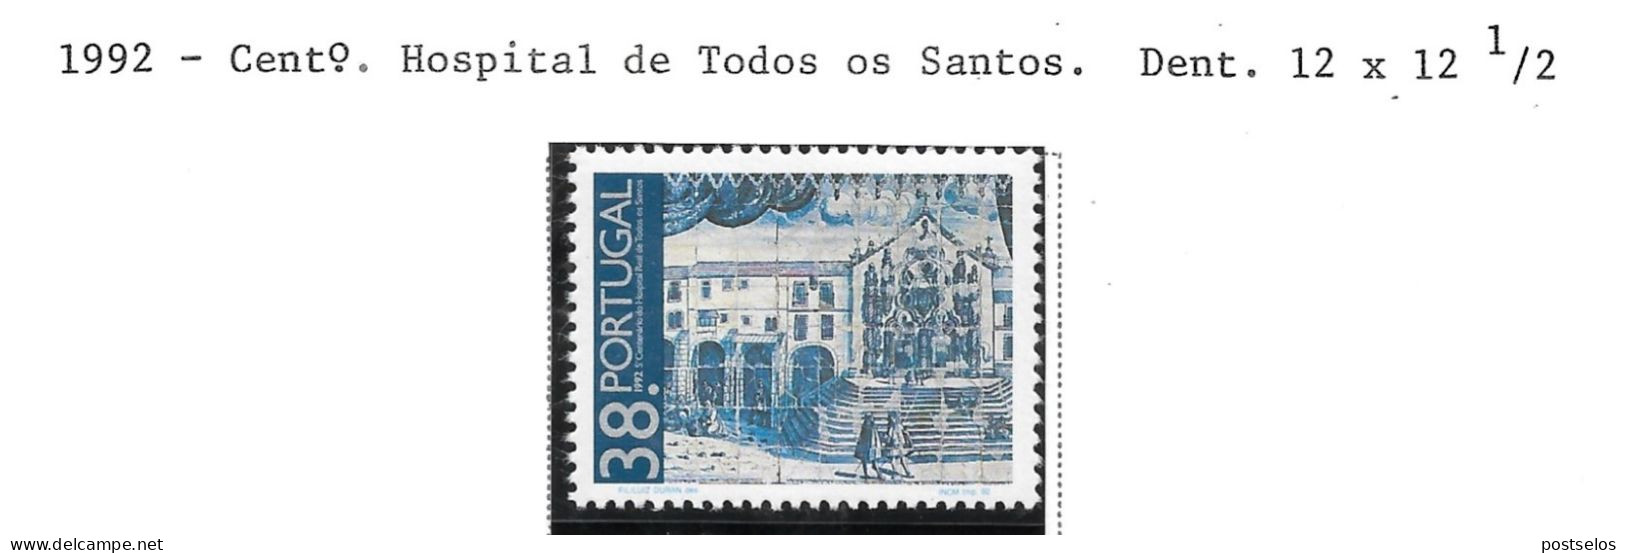 Hospital Todos Os Santos - Unused Stamps